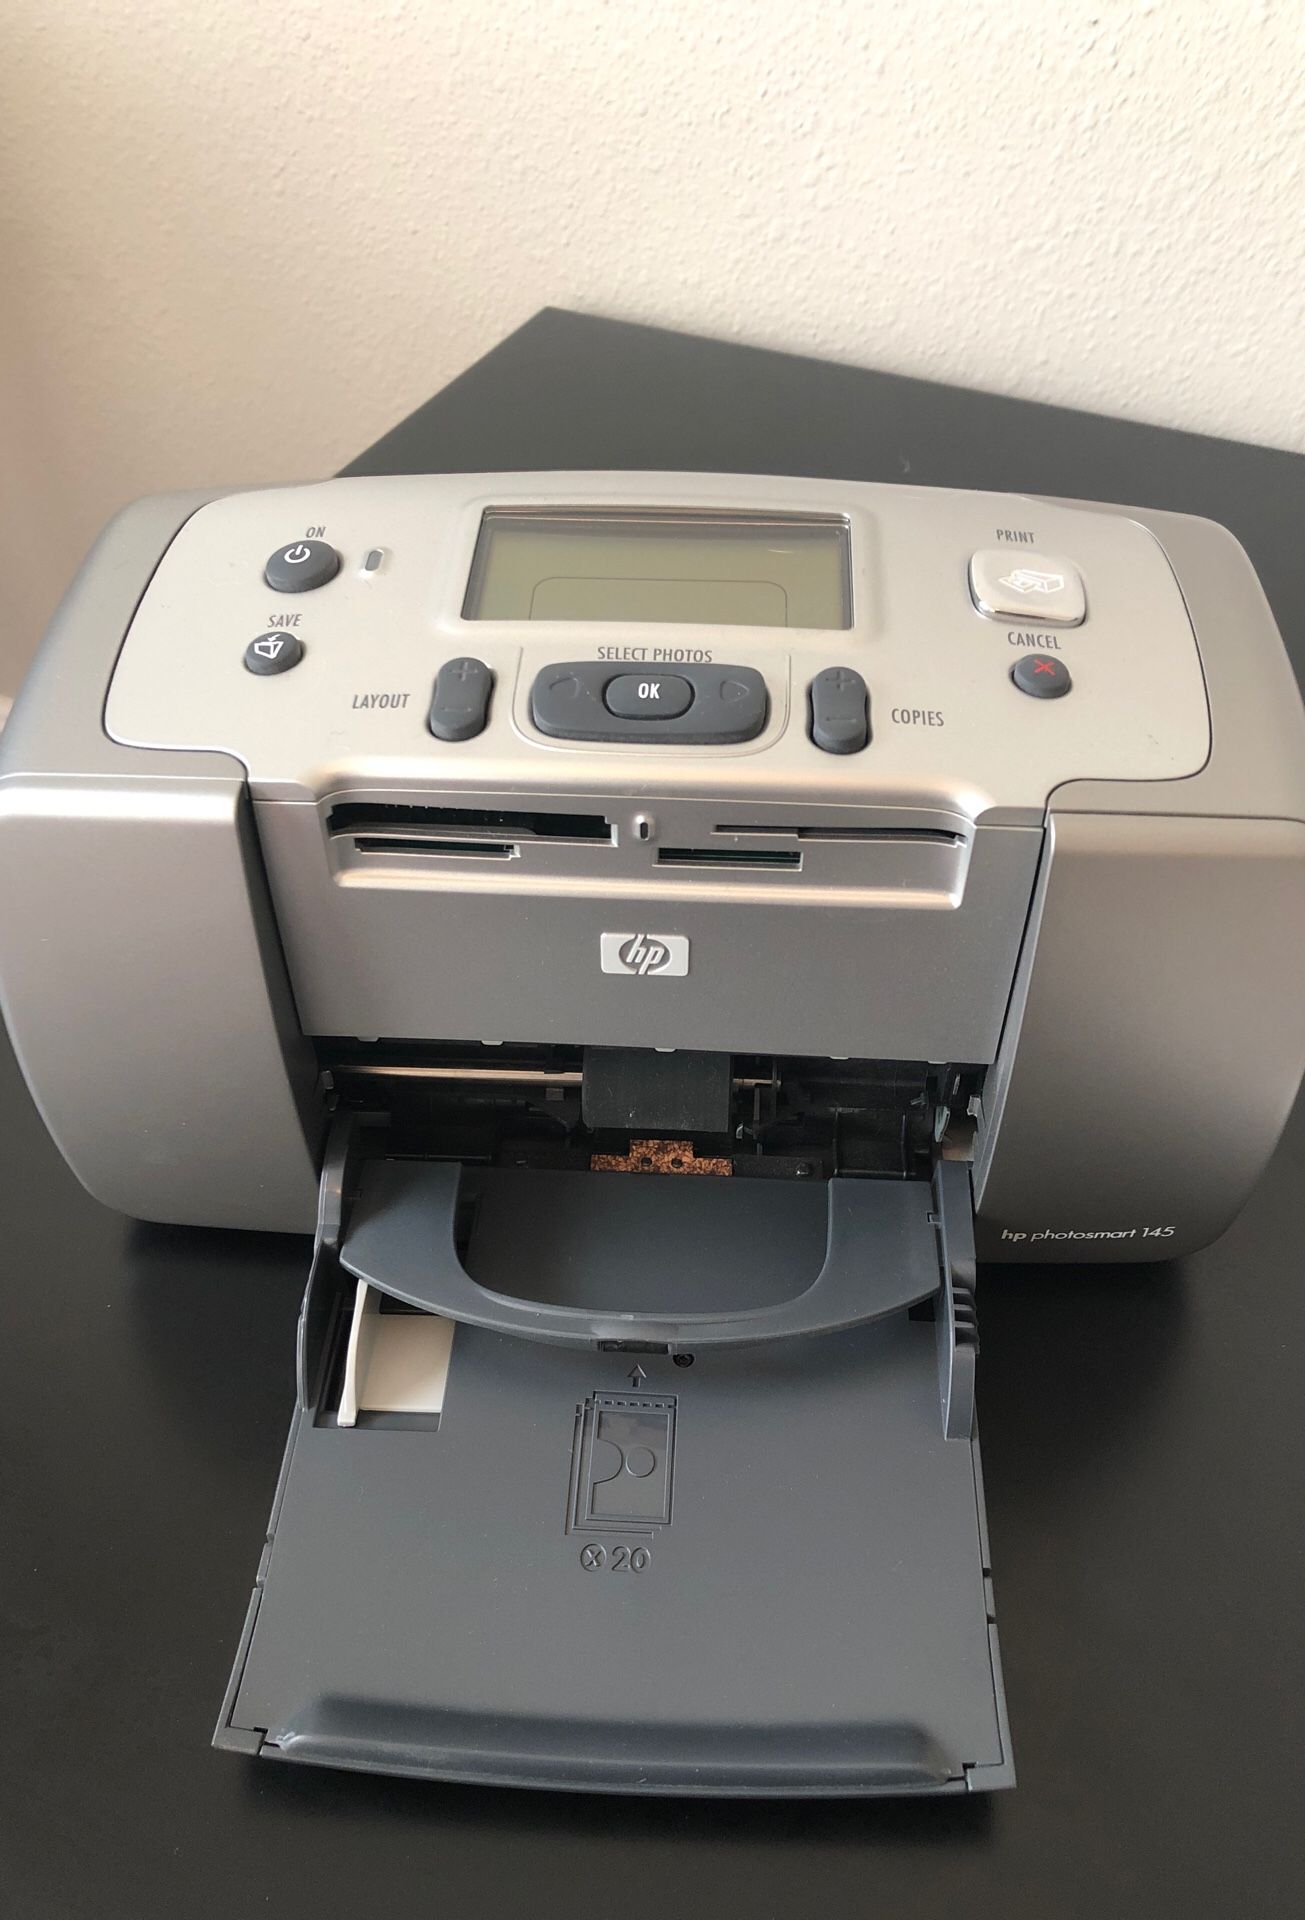 HP Photosmart 145 printer